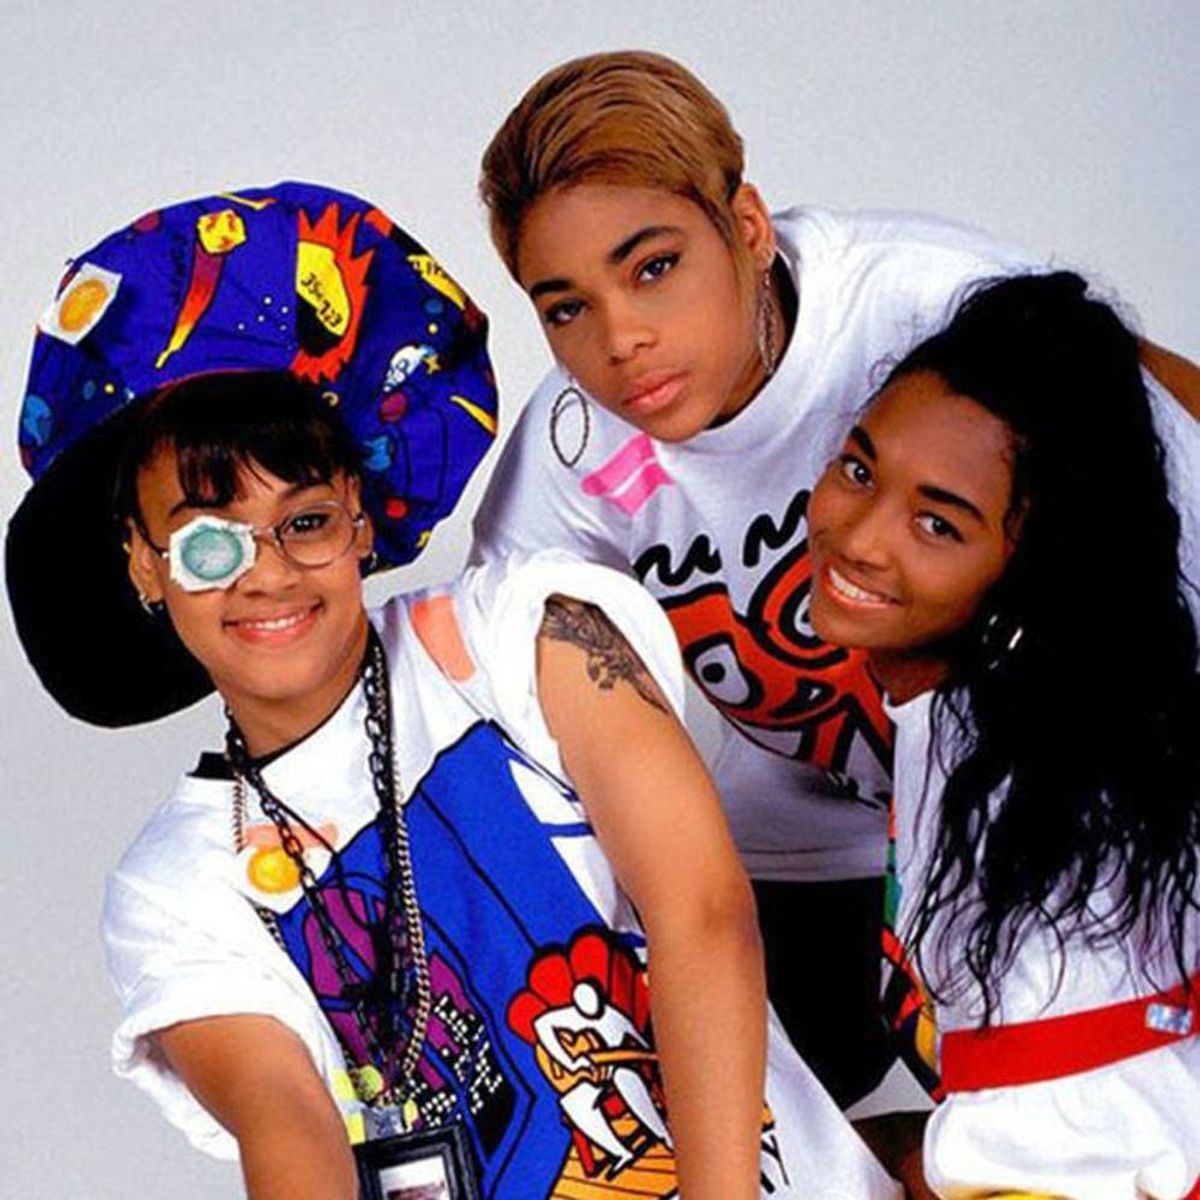 ’90s Nostalgia Alert: TLC Is Funding Their Final Album on Kickstarter